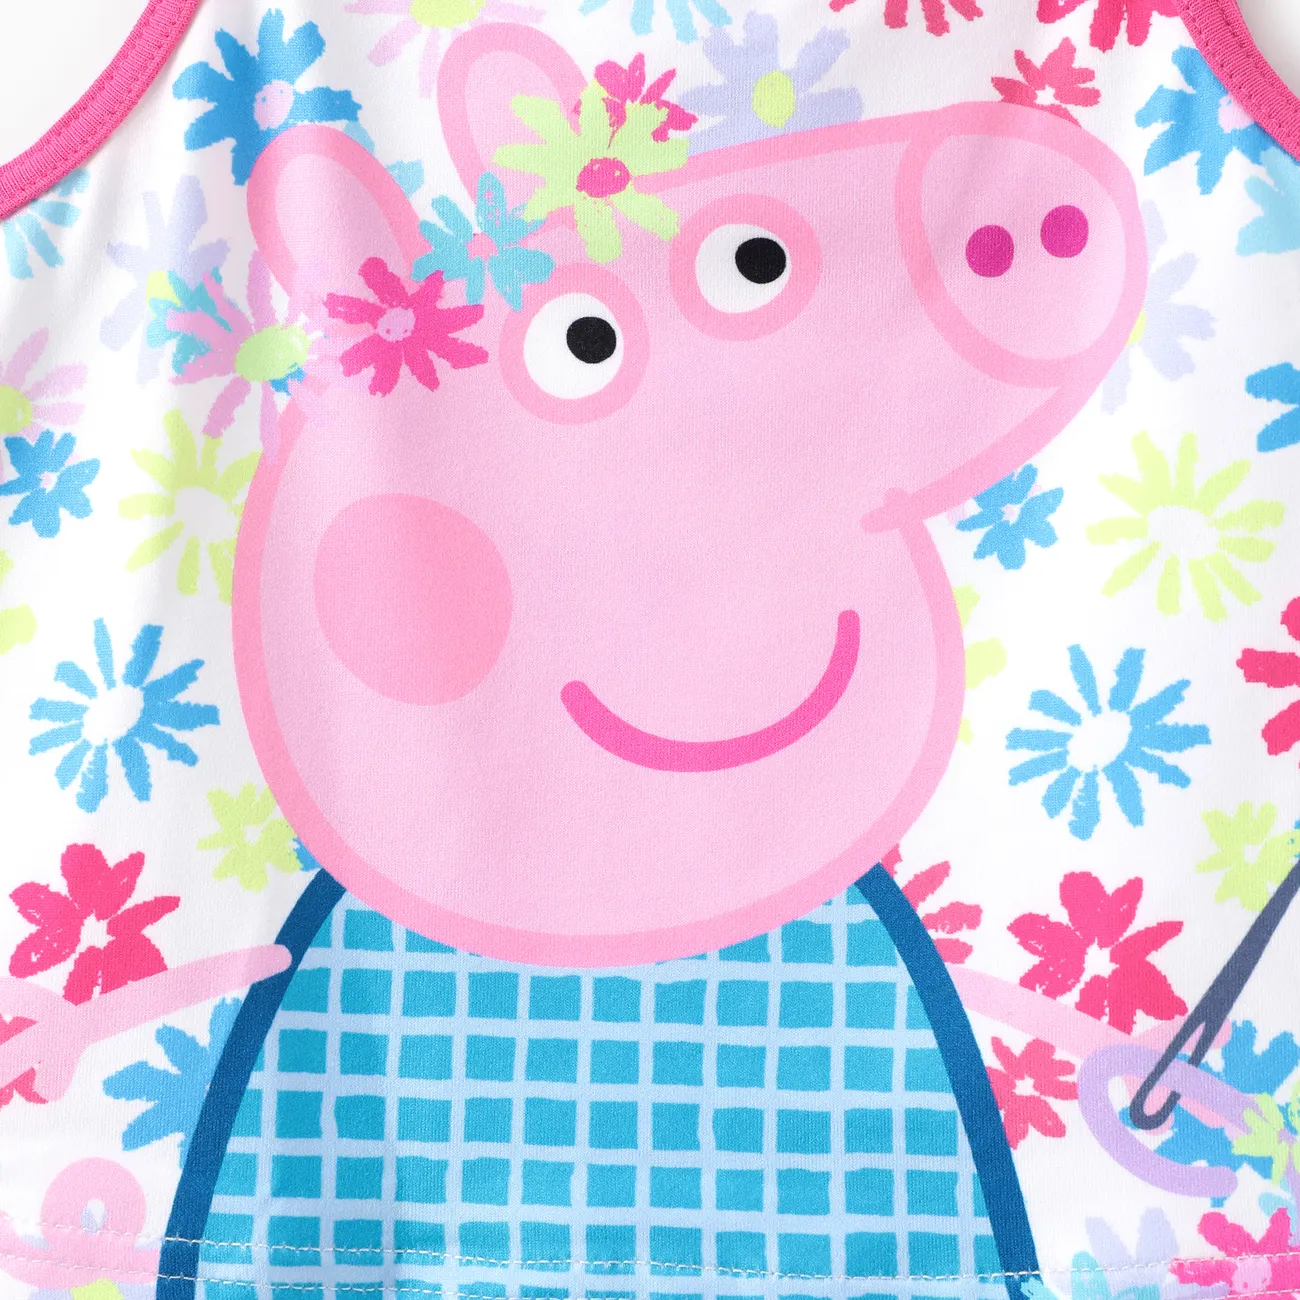 Peppa Pig 2件 小童 女 喇叭袖 童趣 碎花 套裝裙 彩色 big image 1